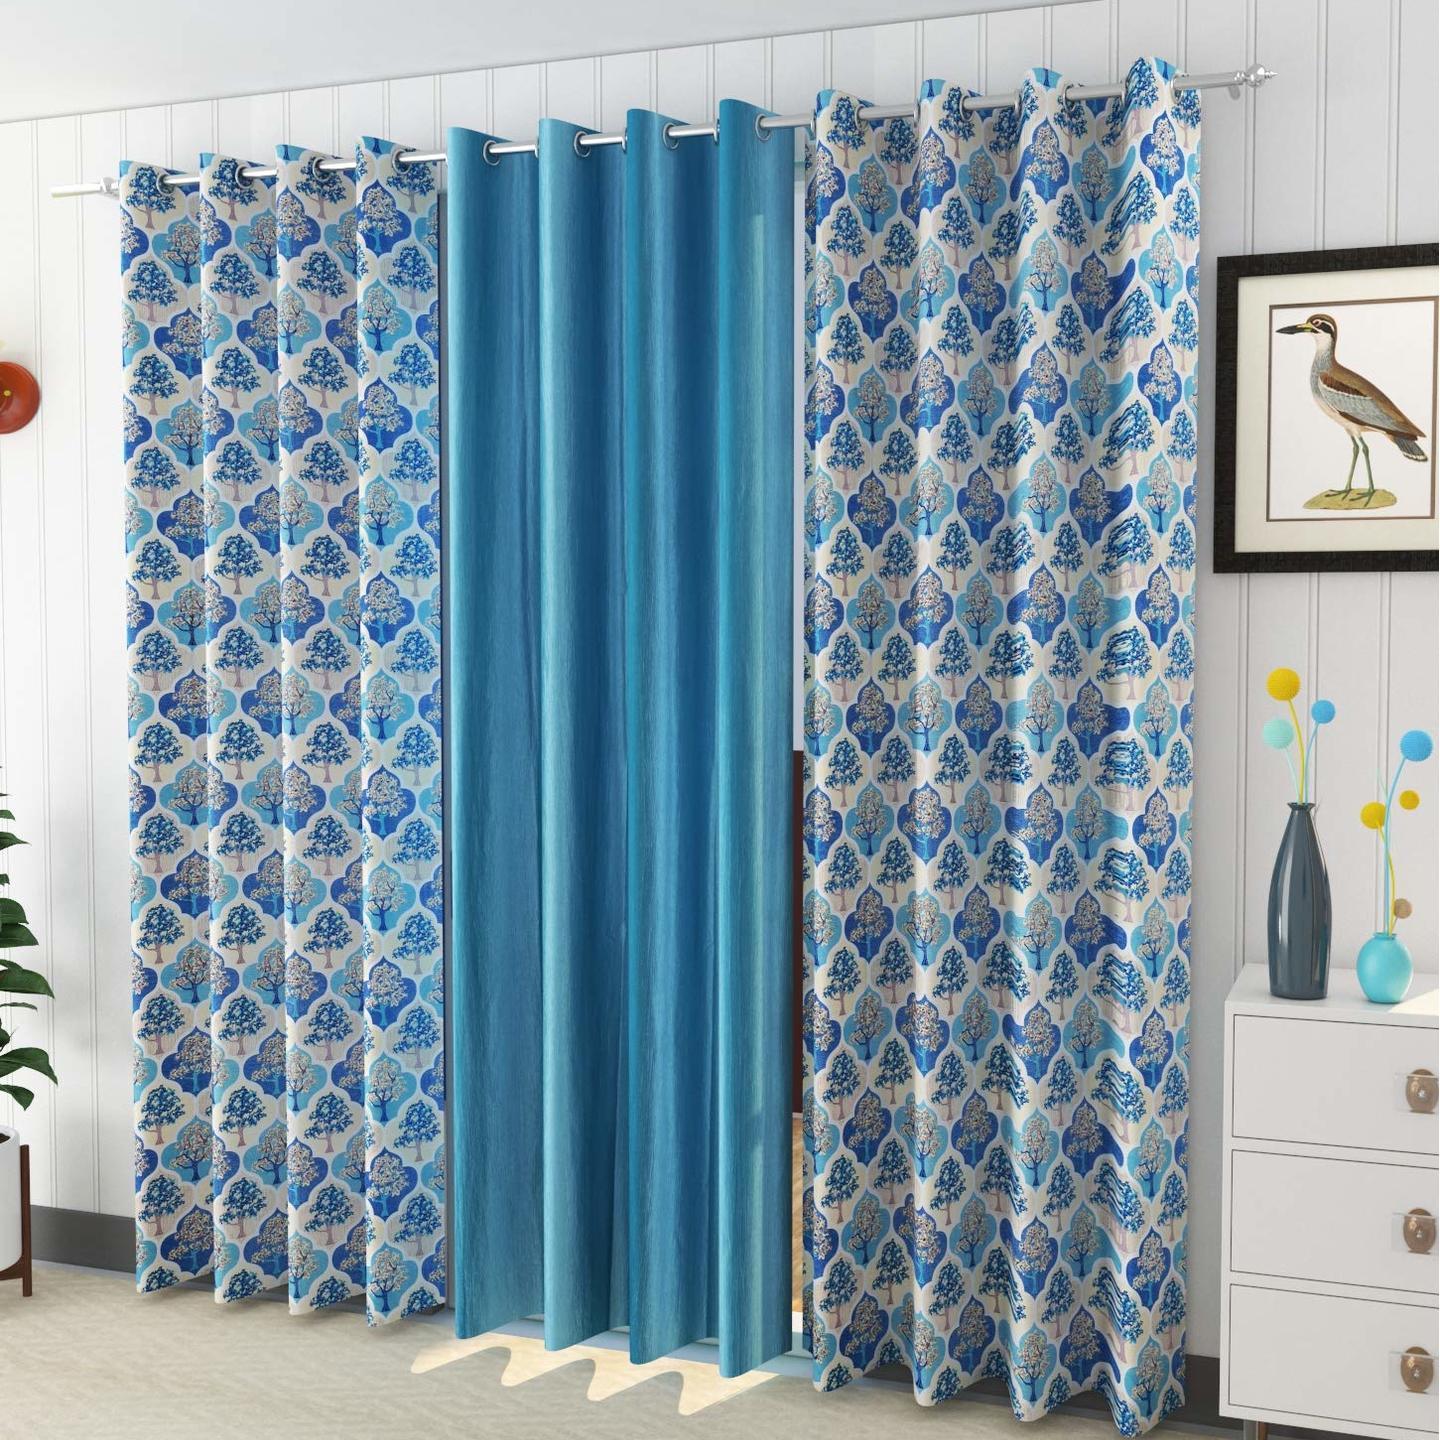 Handtex Home Curtains Polyester Tree Printed Set of 3 Pcs Aqua (2Tree+1 Plain) Size for Long Door 4 Feet x 9 Feet